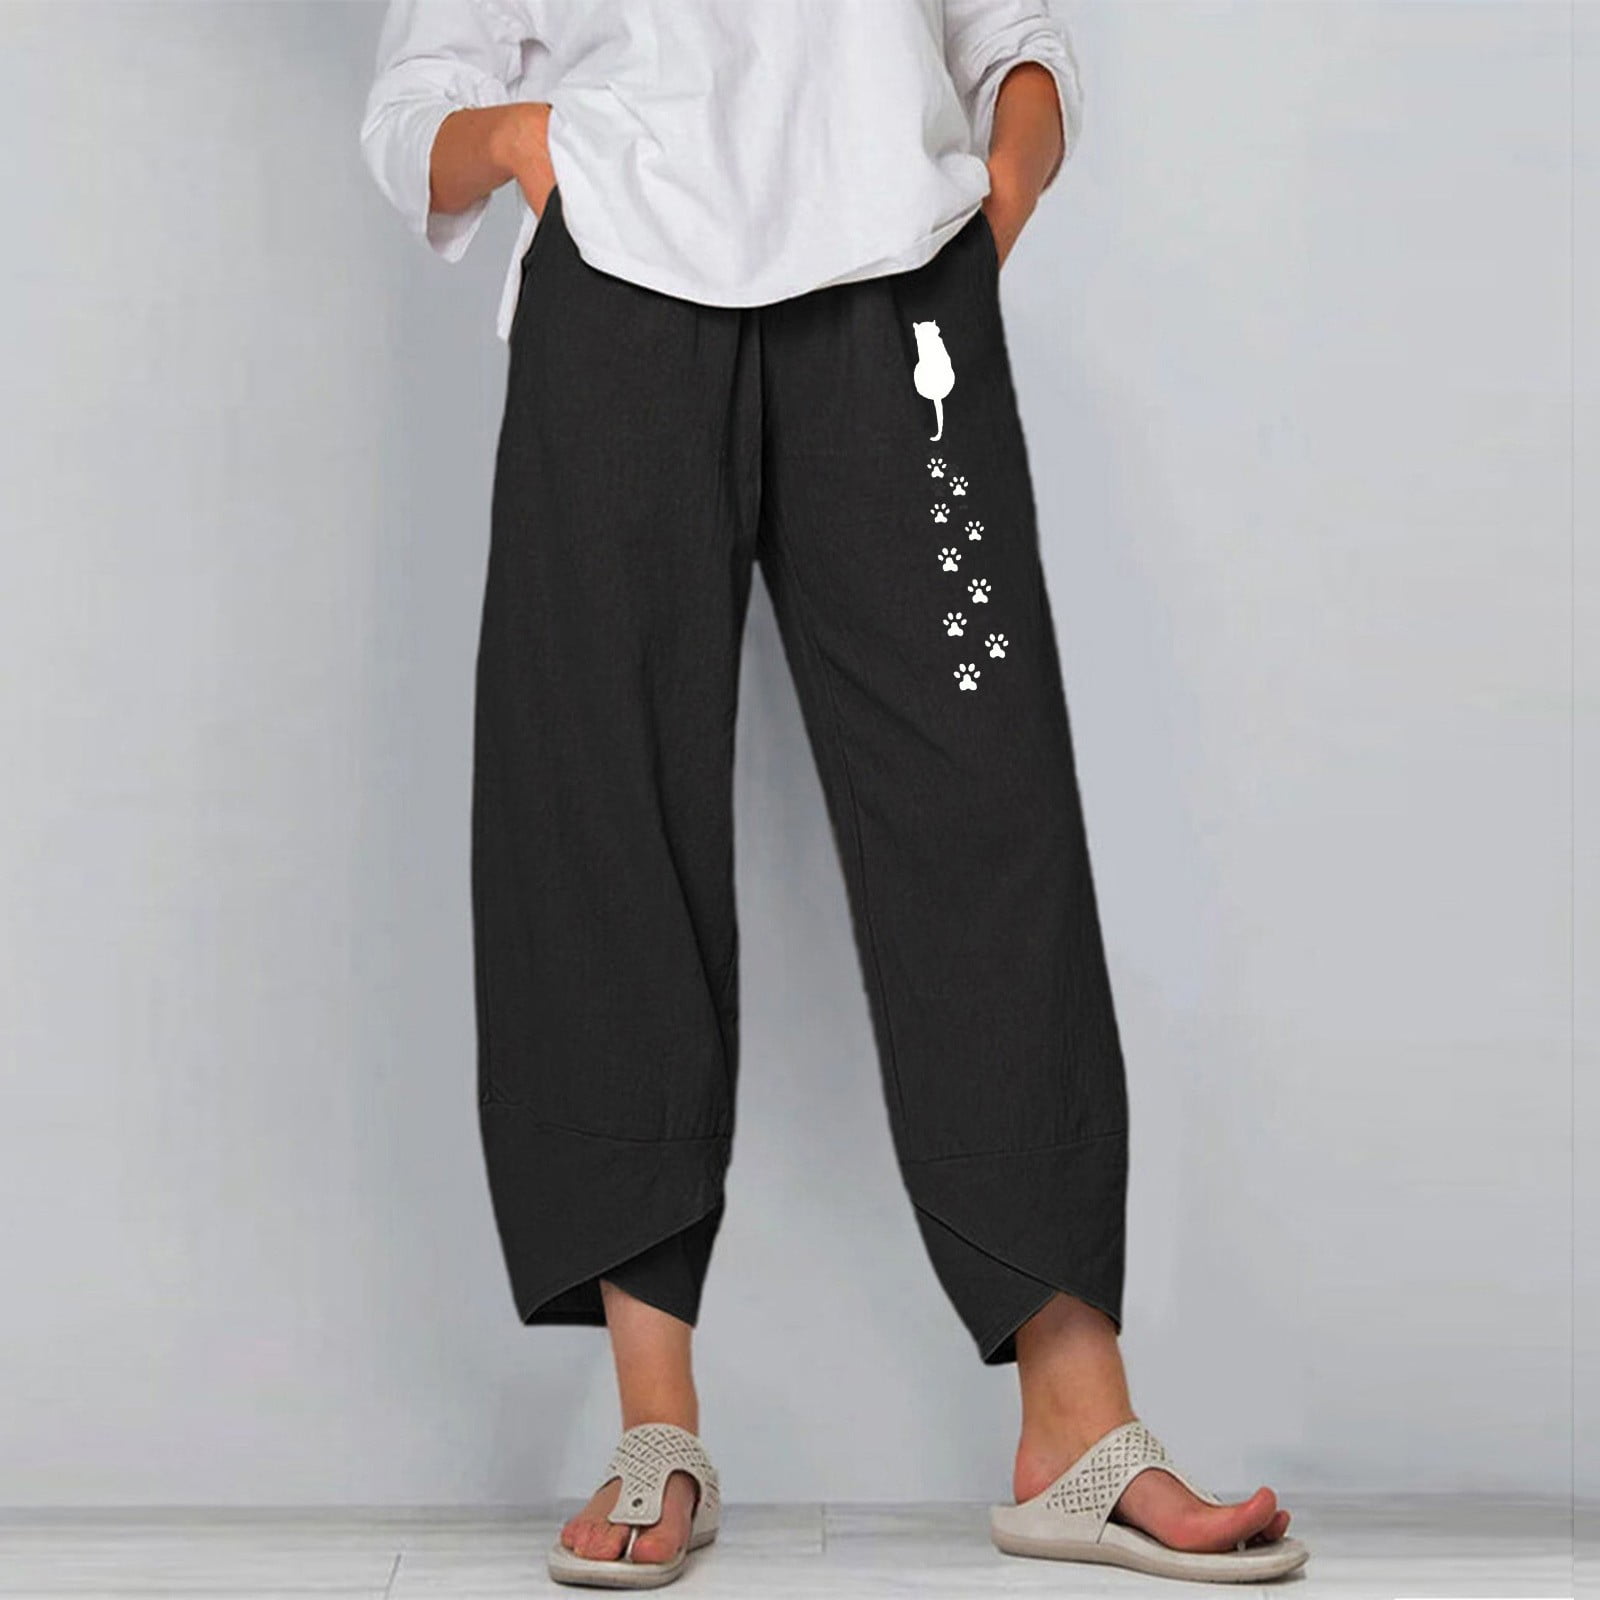 adviicd Business Casual Pants For Women Petite Women Pants Suits